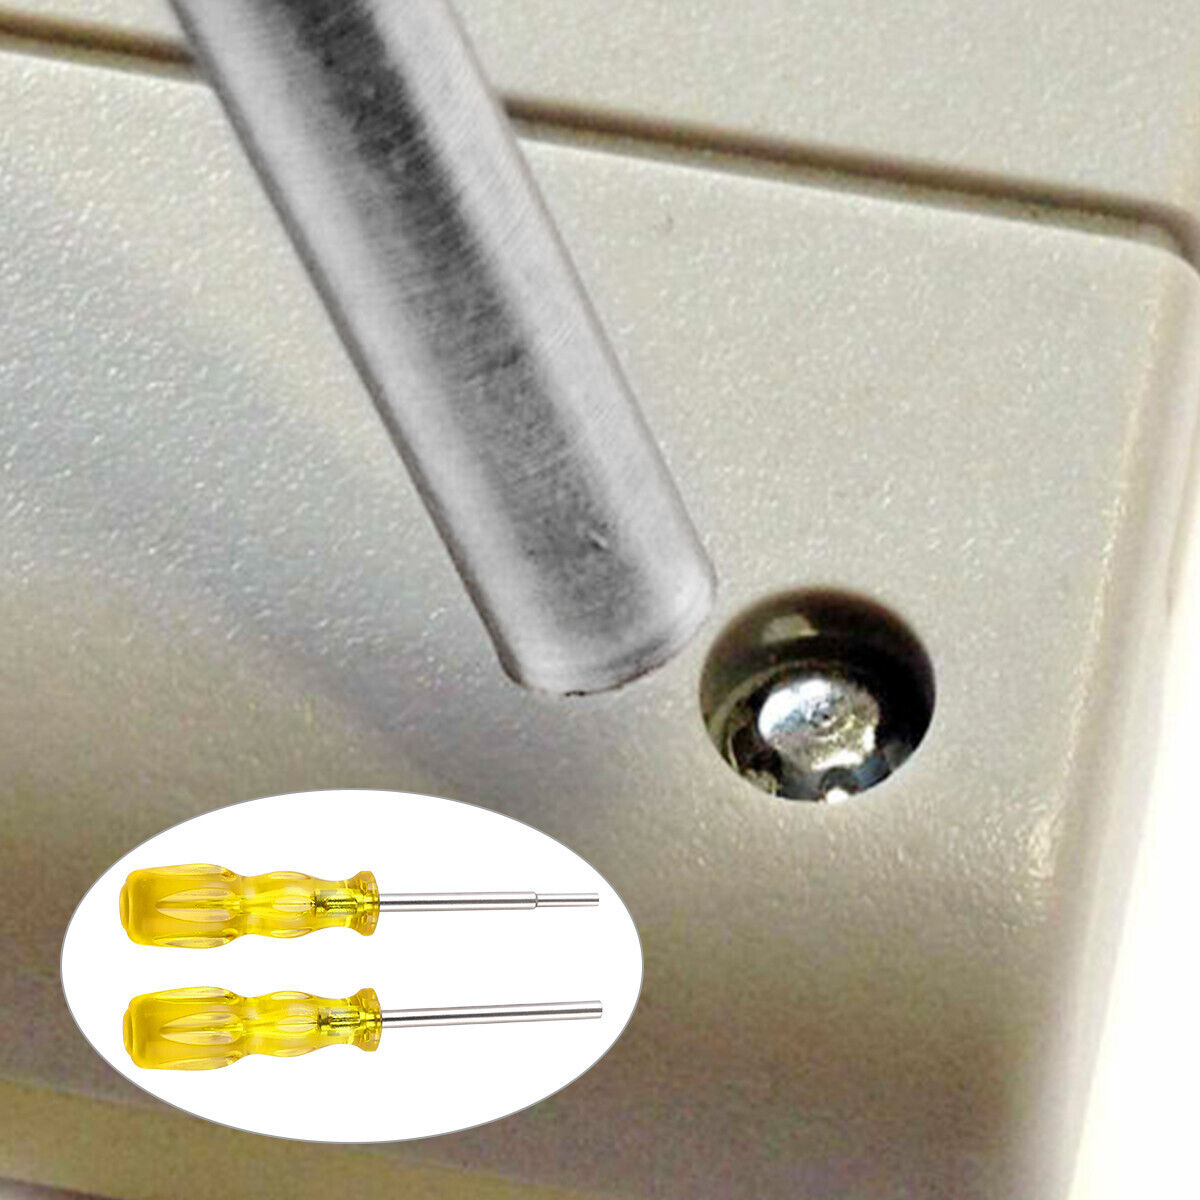 3.8mm+4.5mm Screwdriver Bit for NES SNES N64 Game Boy Nintendo Security Tool Set Unbranded - фотография #6